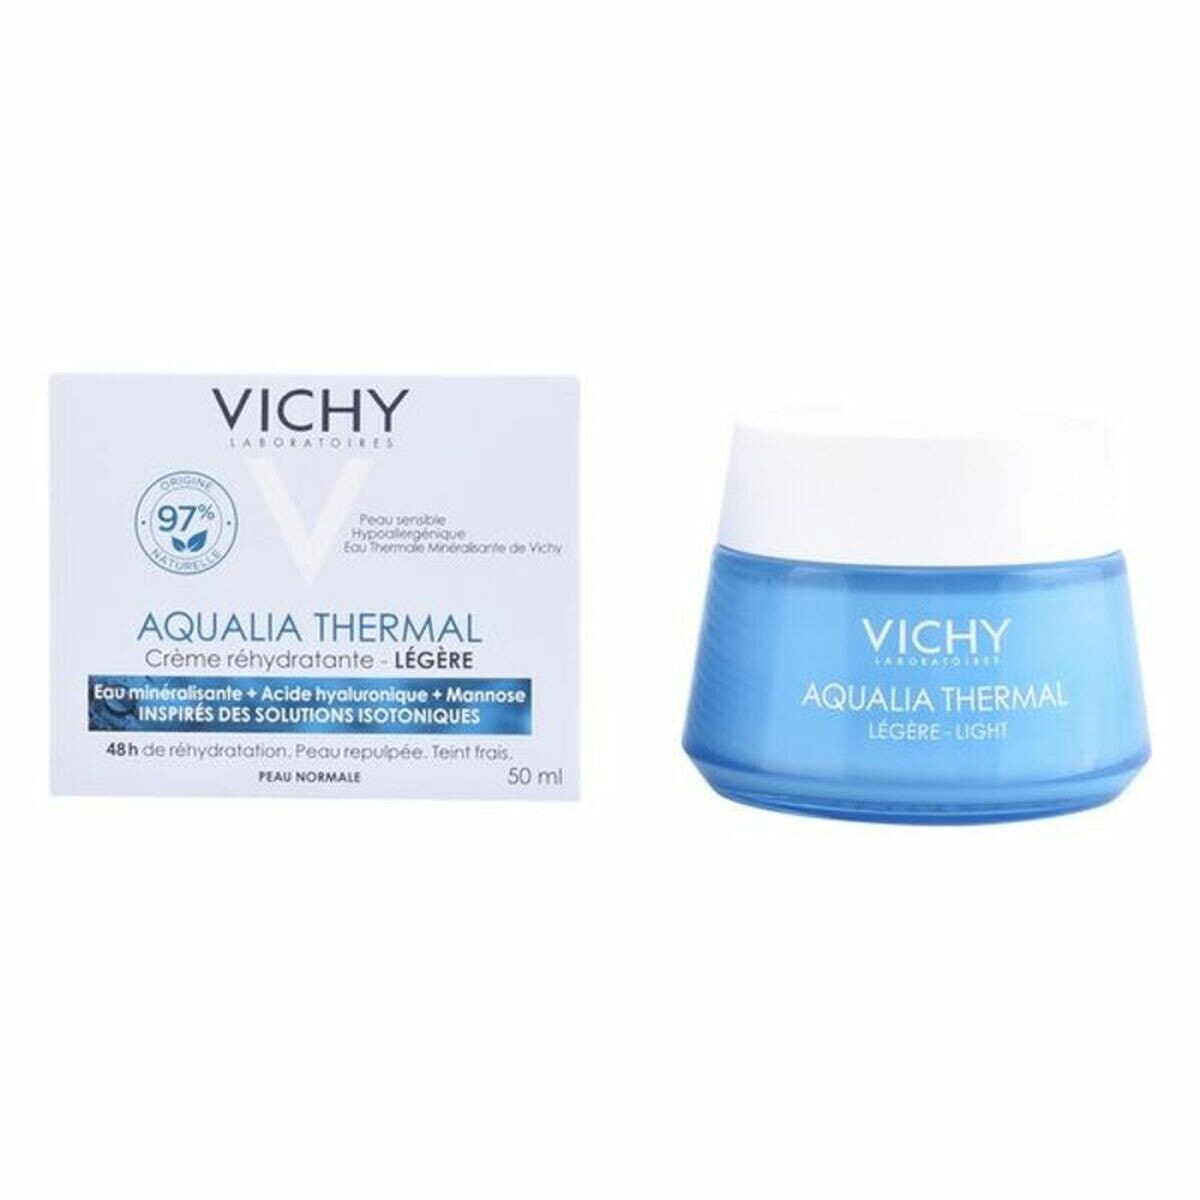 Увлажняющий крем Aqualia Thermal Vichy (50 ml) Нормальная кожа